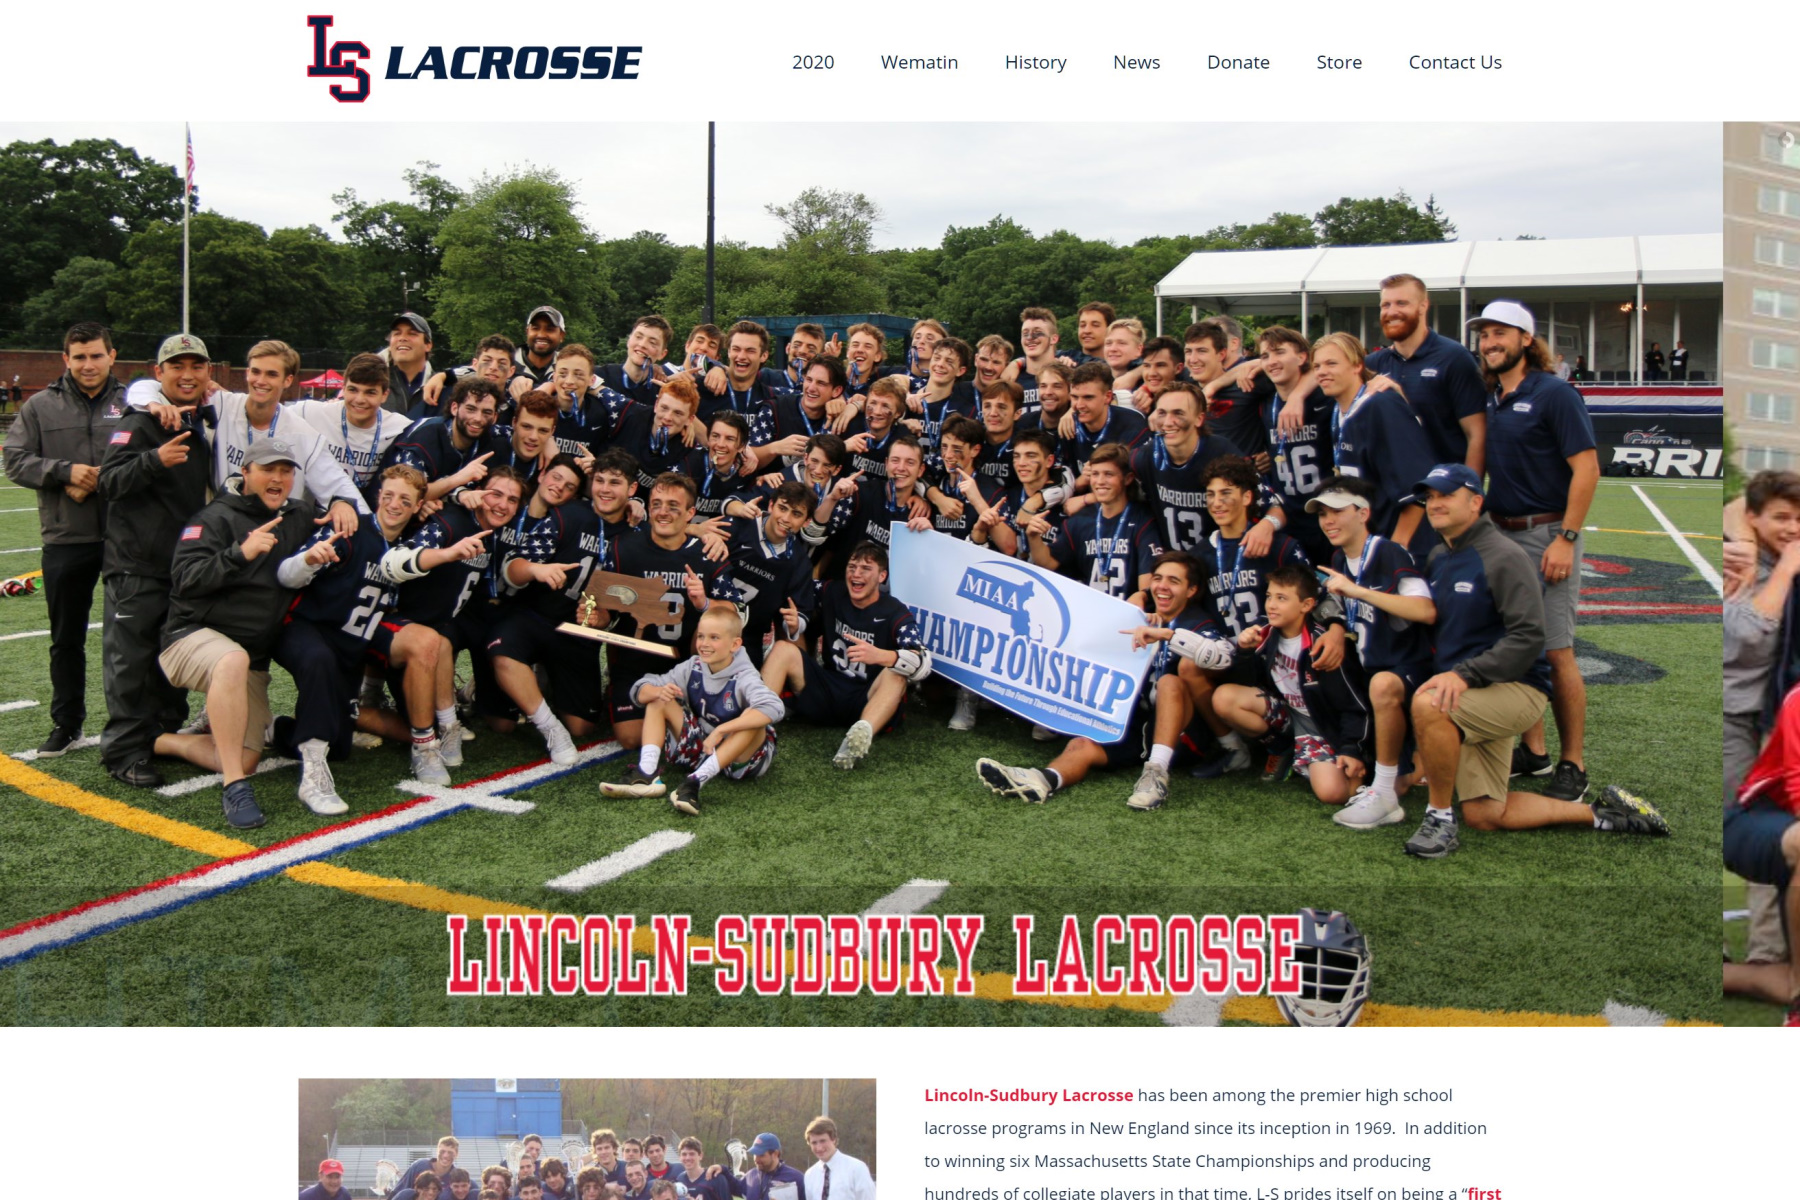 Lincoln-Sudbury Lacrosse